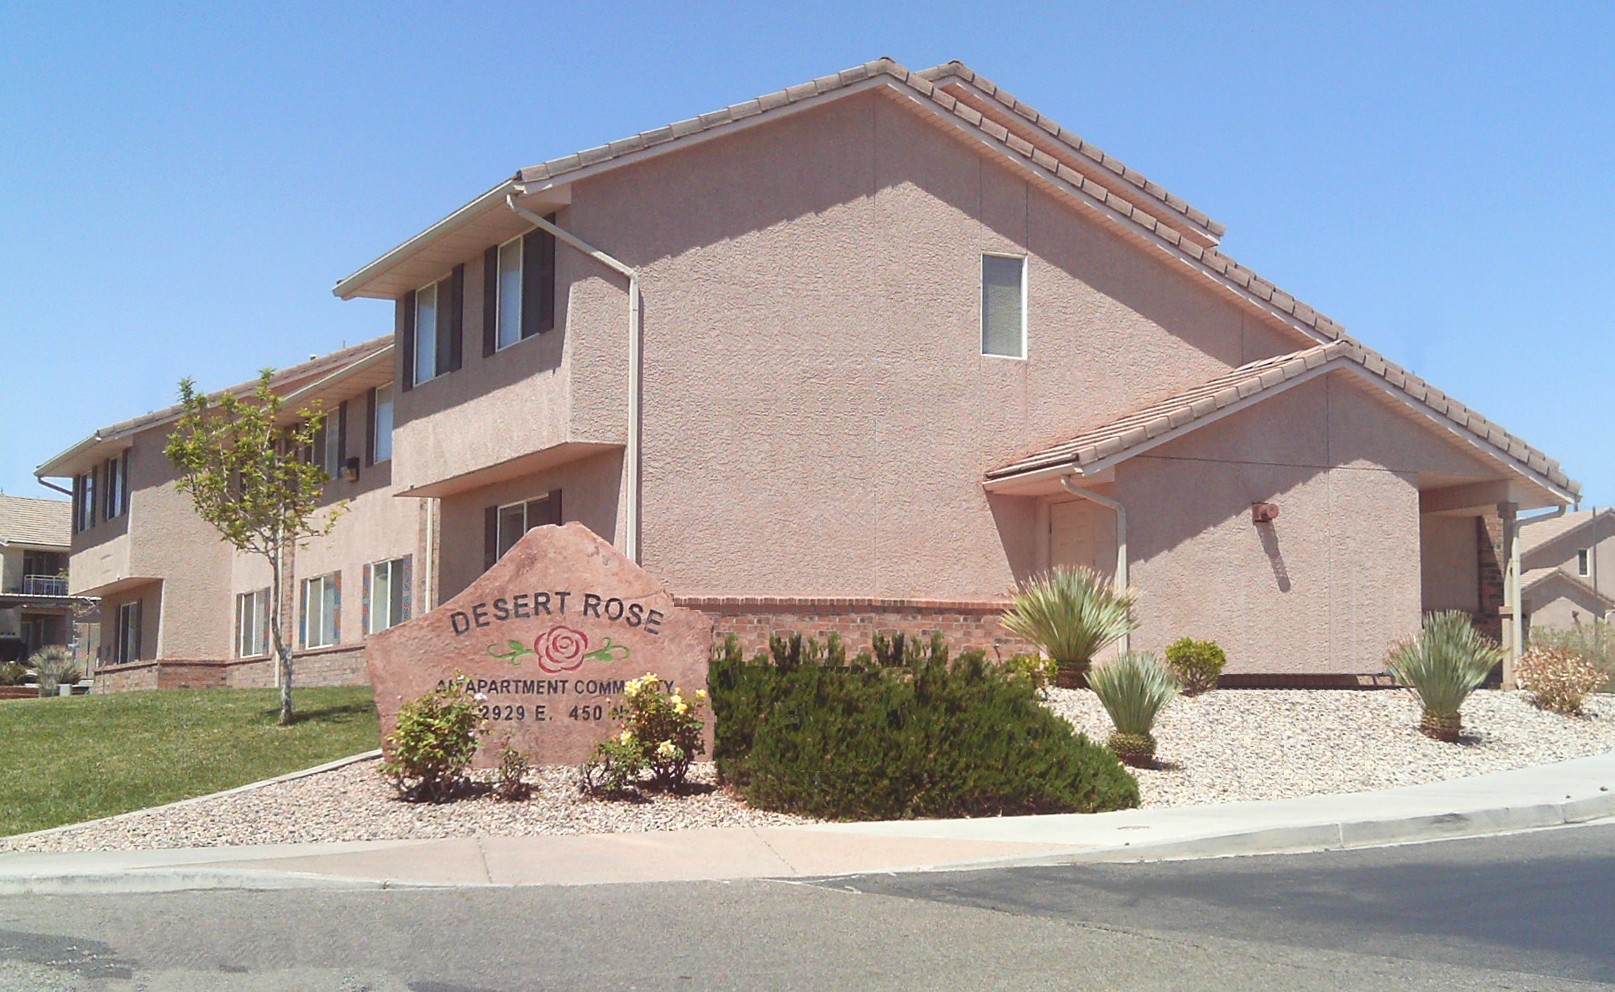 Desert Rose Apartments